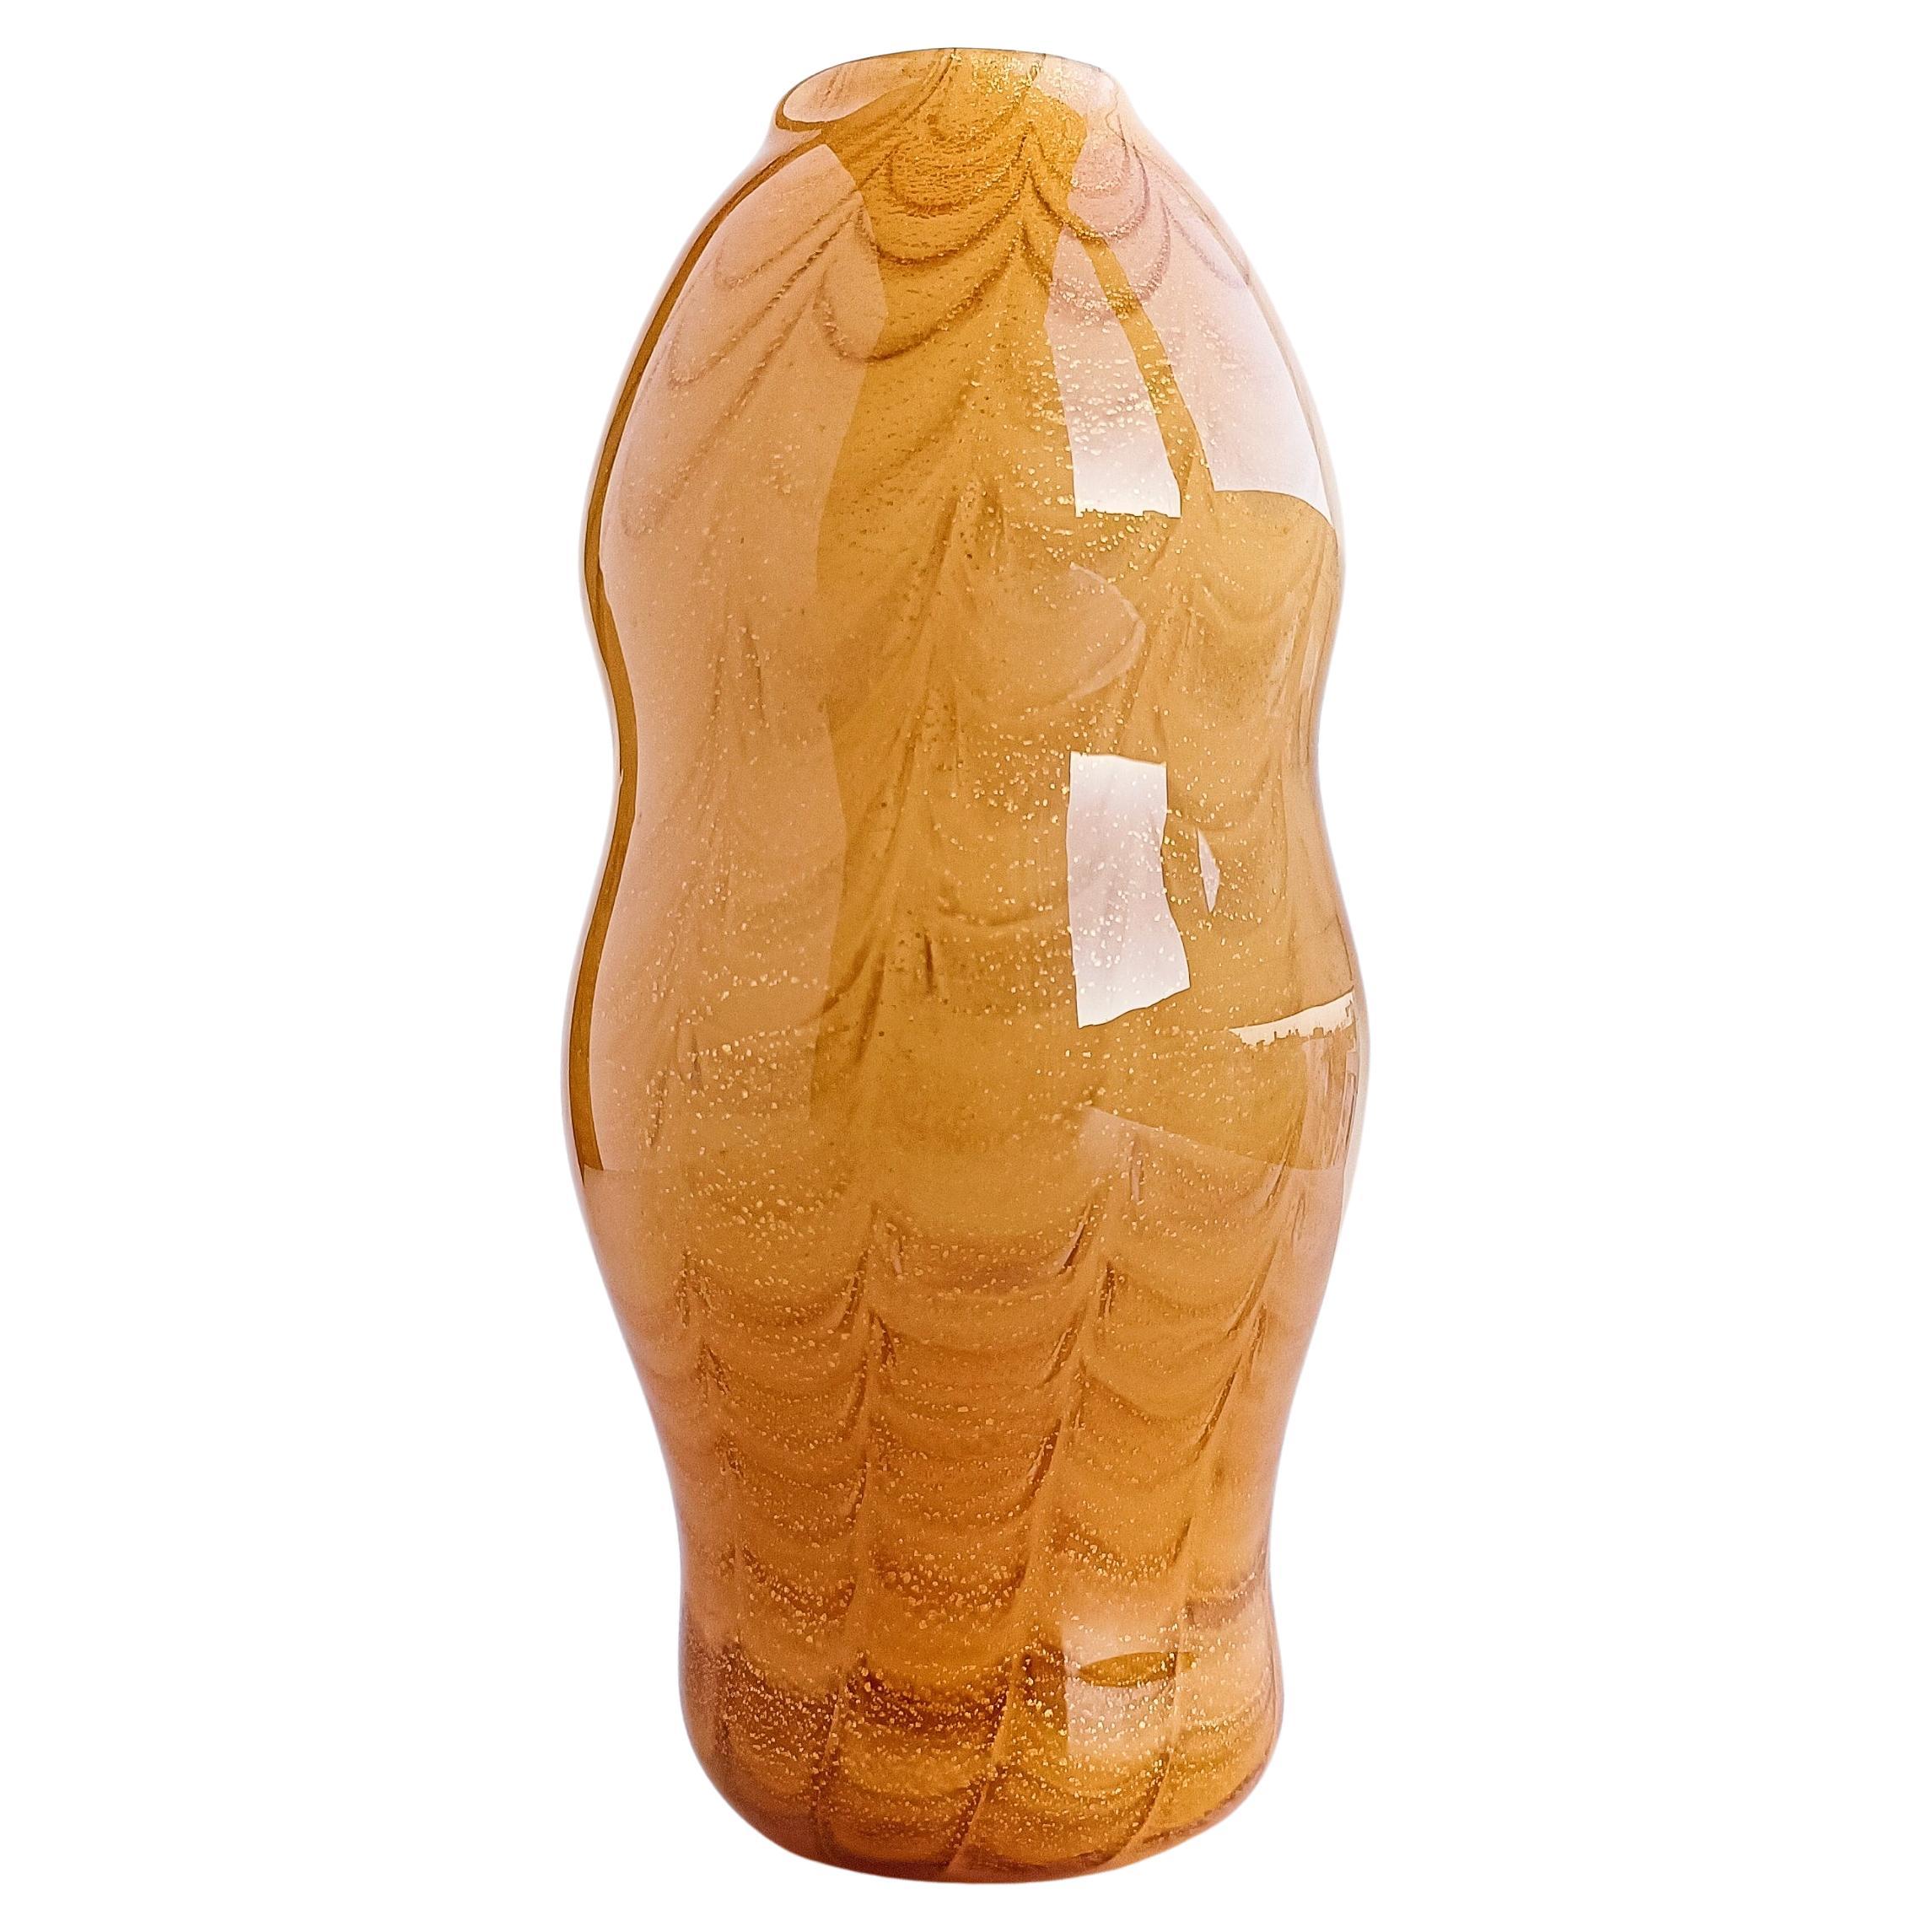 Art Glass Vintage Italian Art Deco Signed Murano Glass Vase With Gold Flecks